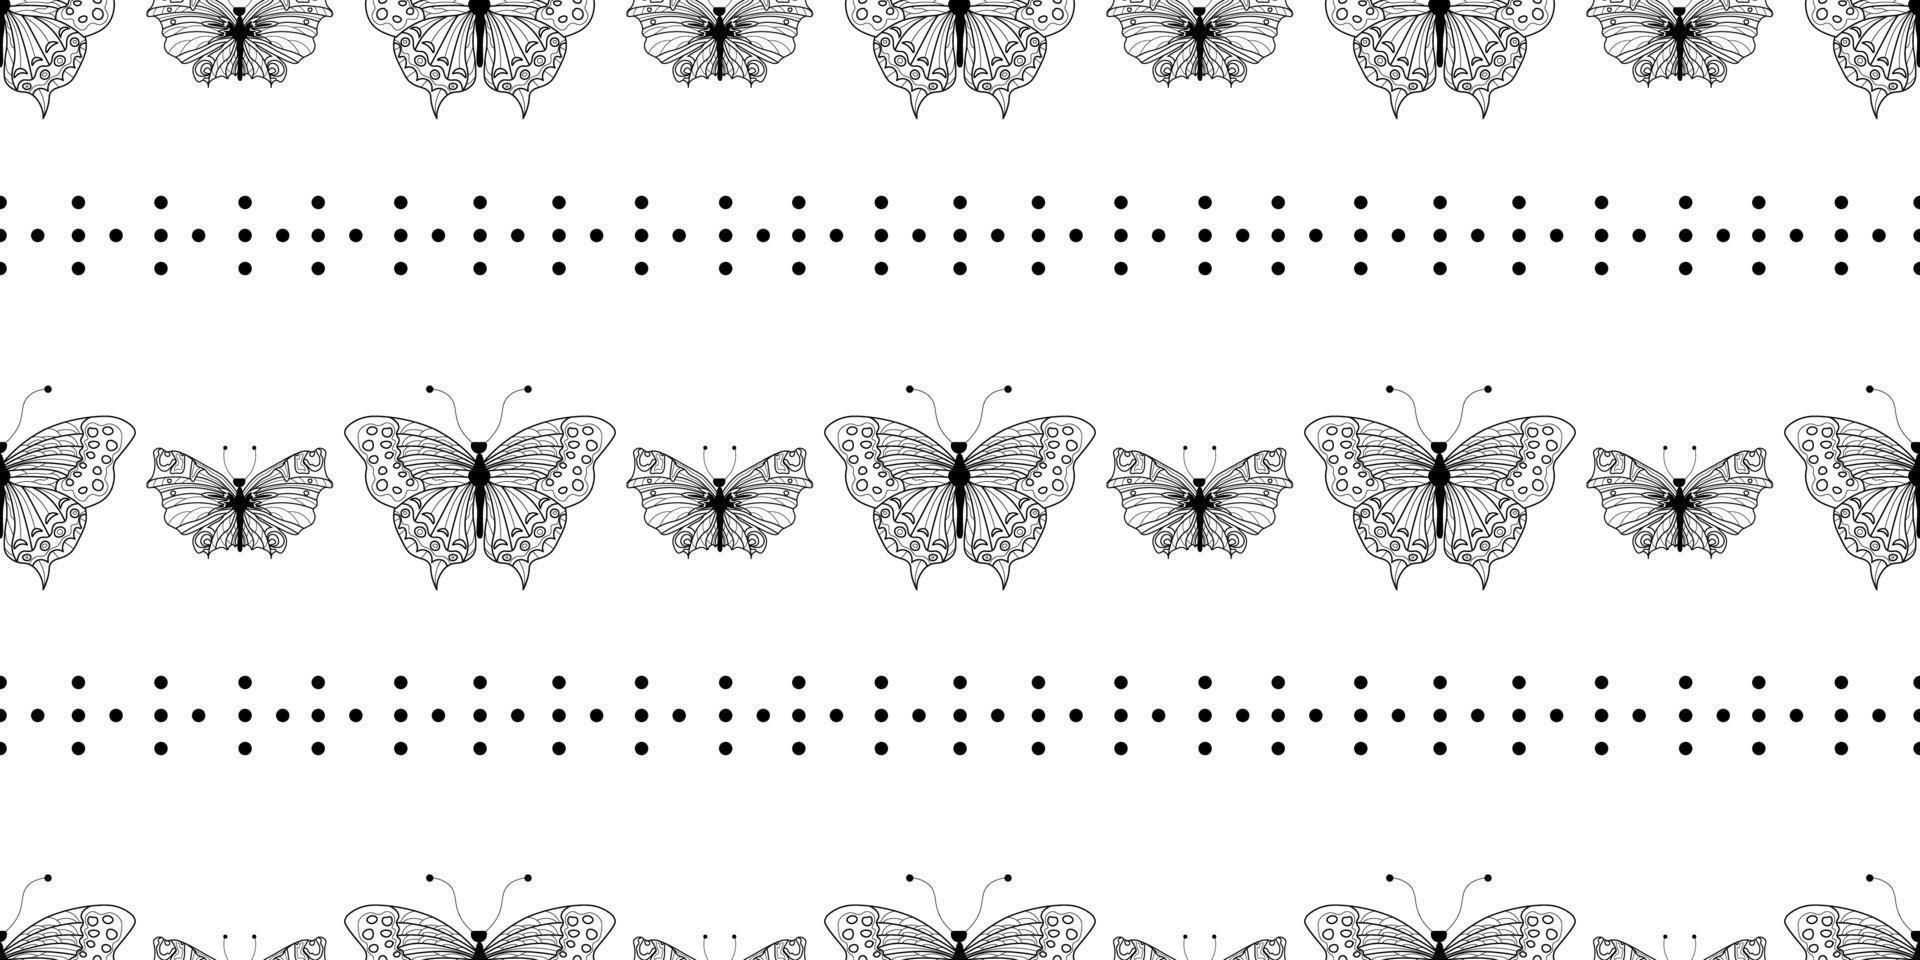 abstrakter moderner Schmetterlingsstil für Tapetendesign. trendiges japanisches banner mit schwarzem modernem schmetterlingsstil. vektor